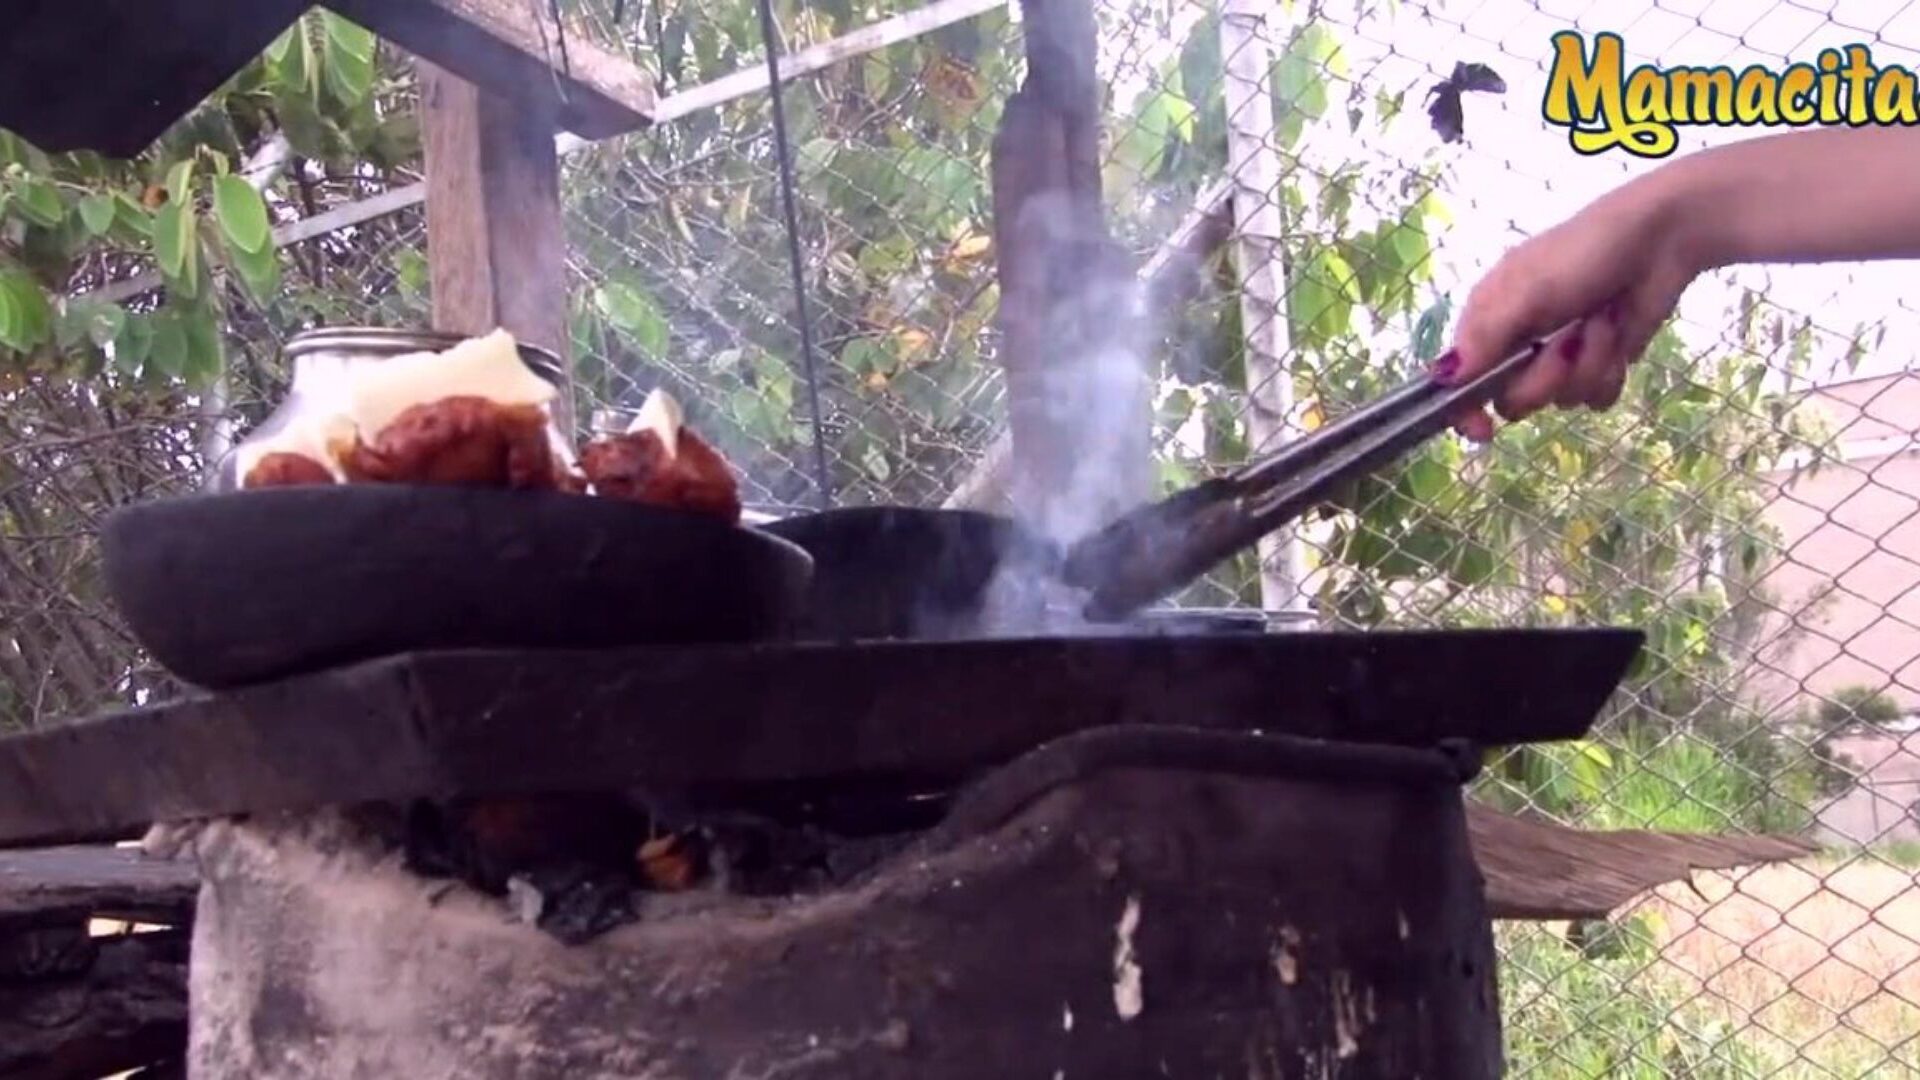 mamacitaz - ספק בשר קולומביאני חם במיוחד חושק בסוג אחר של בשר